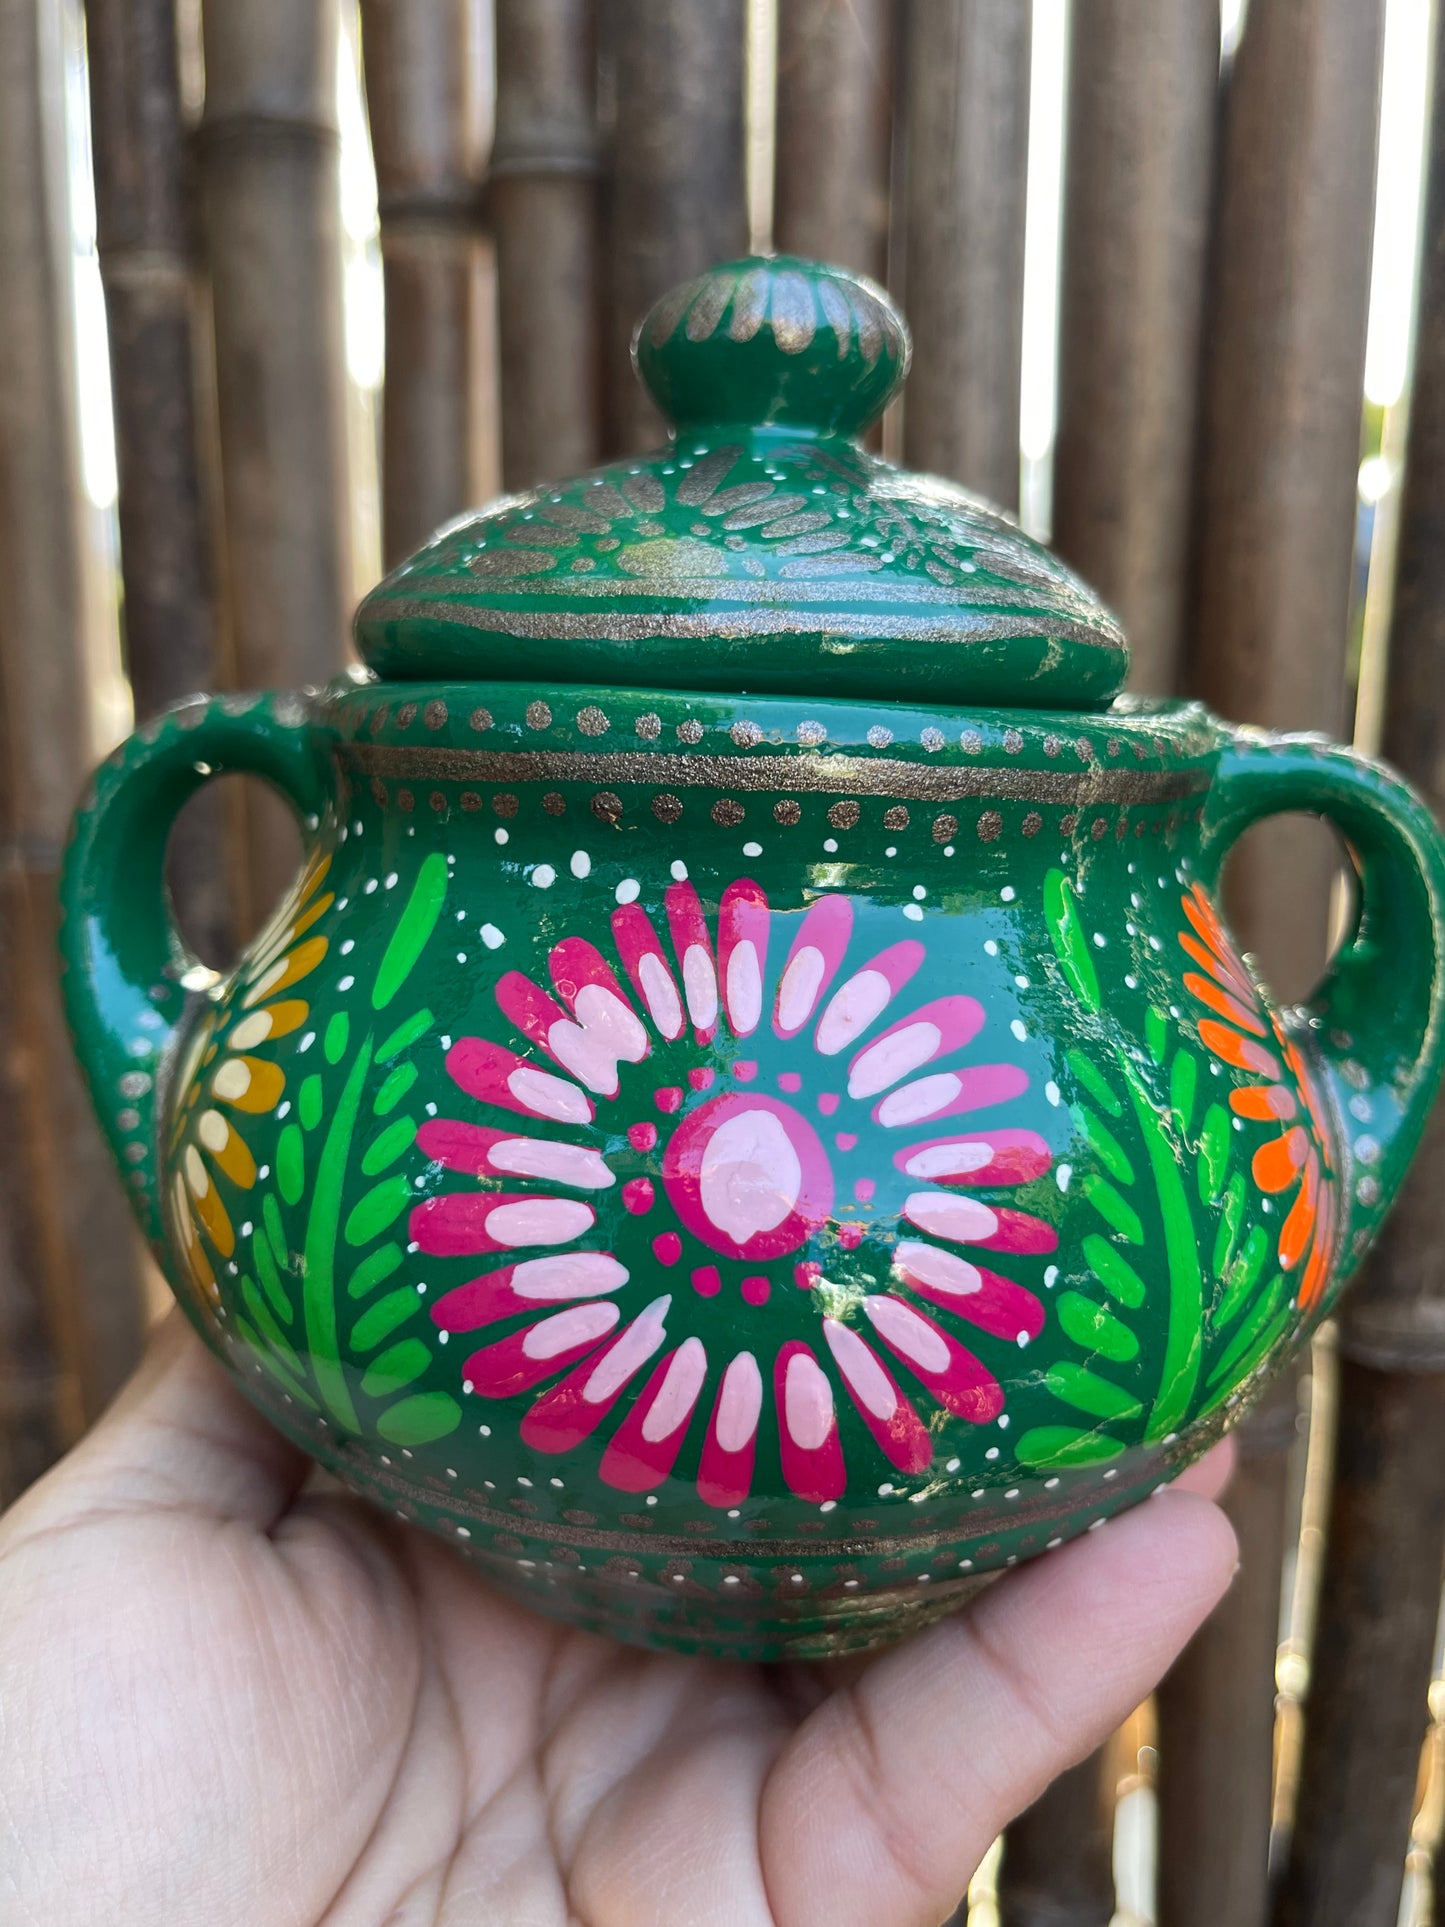 Azucarera Morelos! Ceramic azucarero canister assorted colors